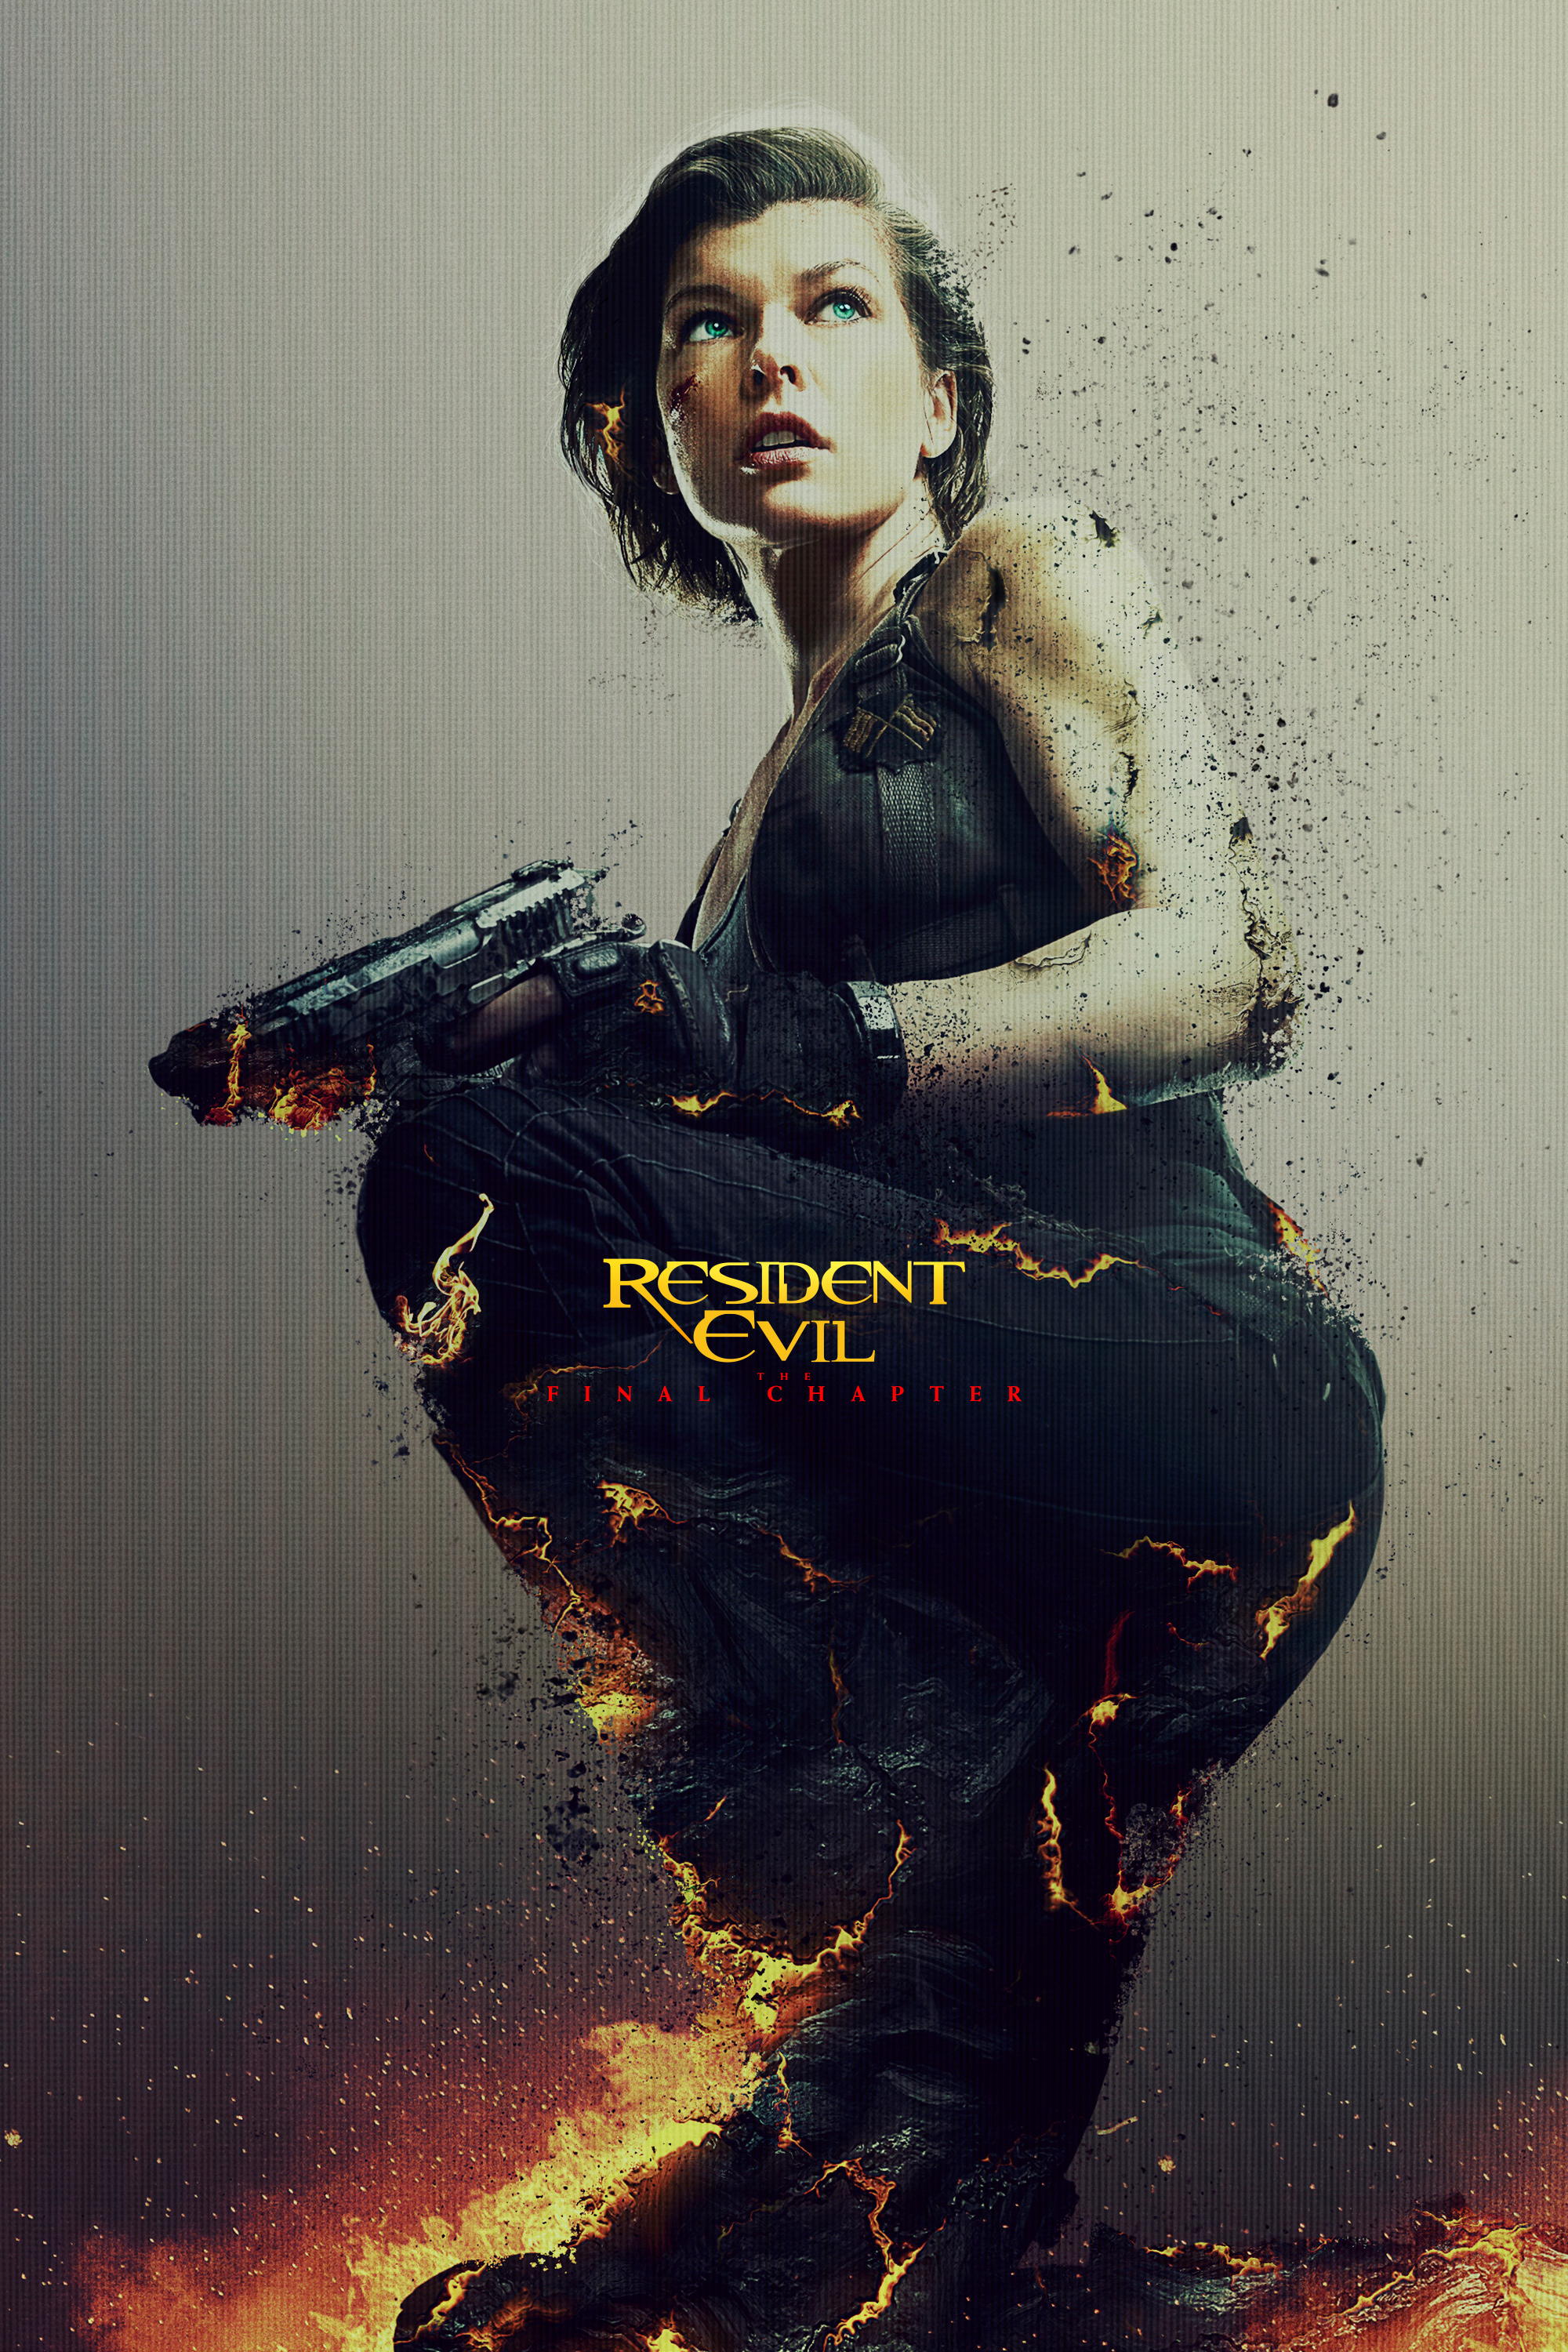 Resident Evil: The Final Chapter trailer released!